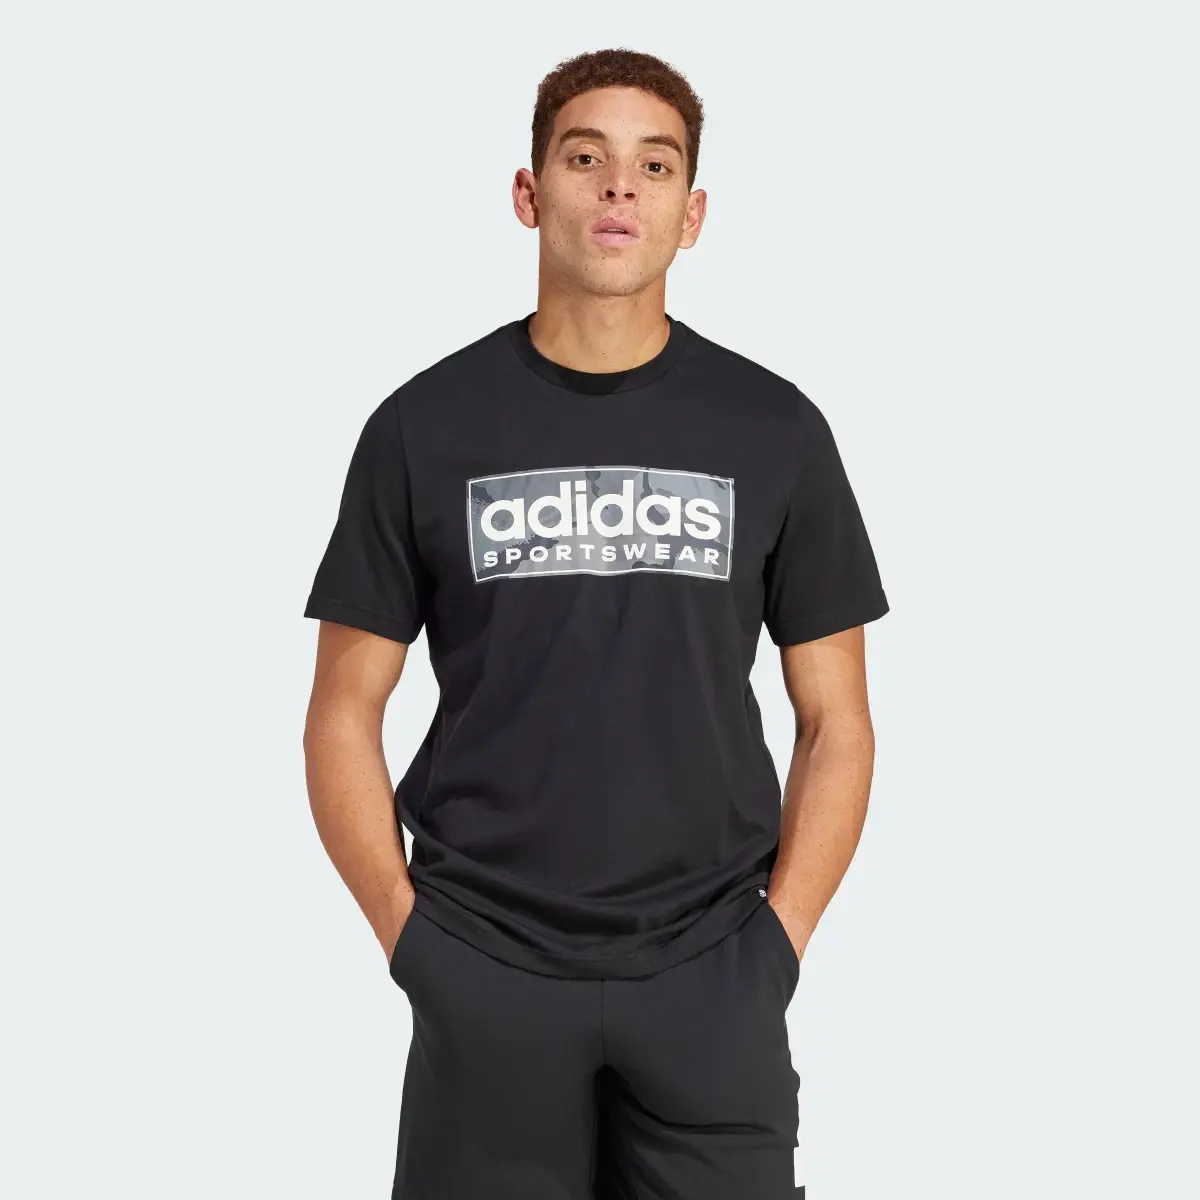 Adidas Camo Linear Graphic T-Shirt. 2